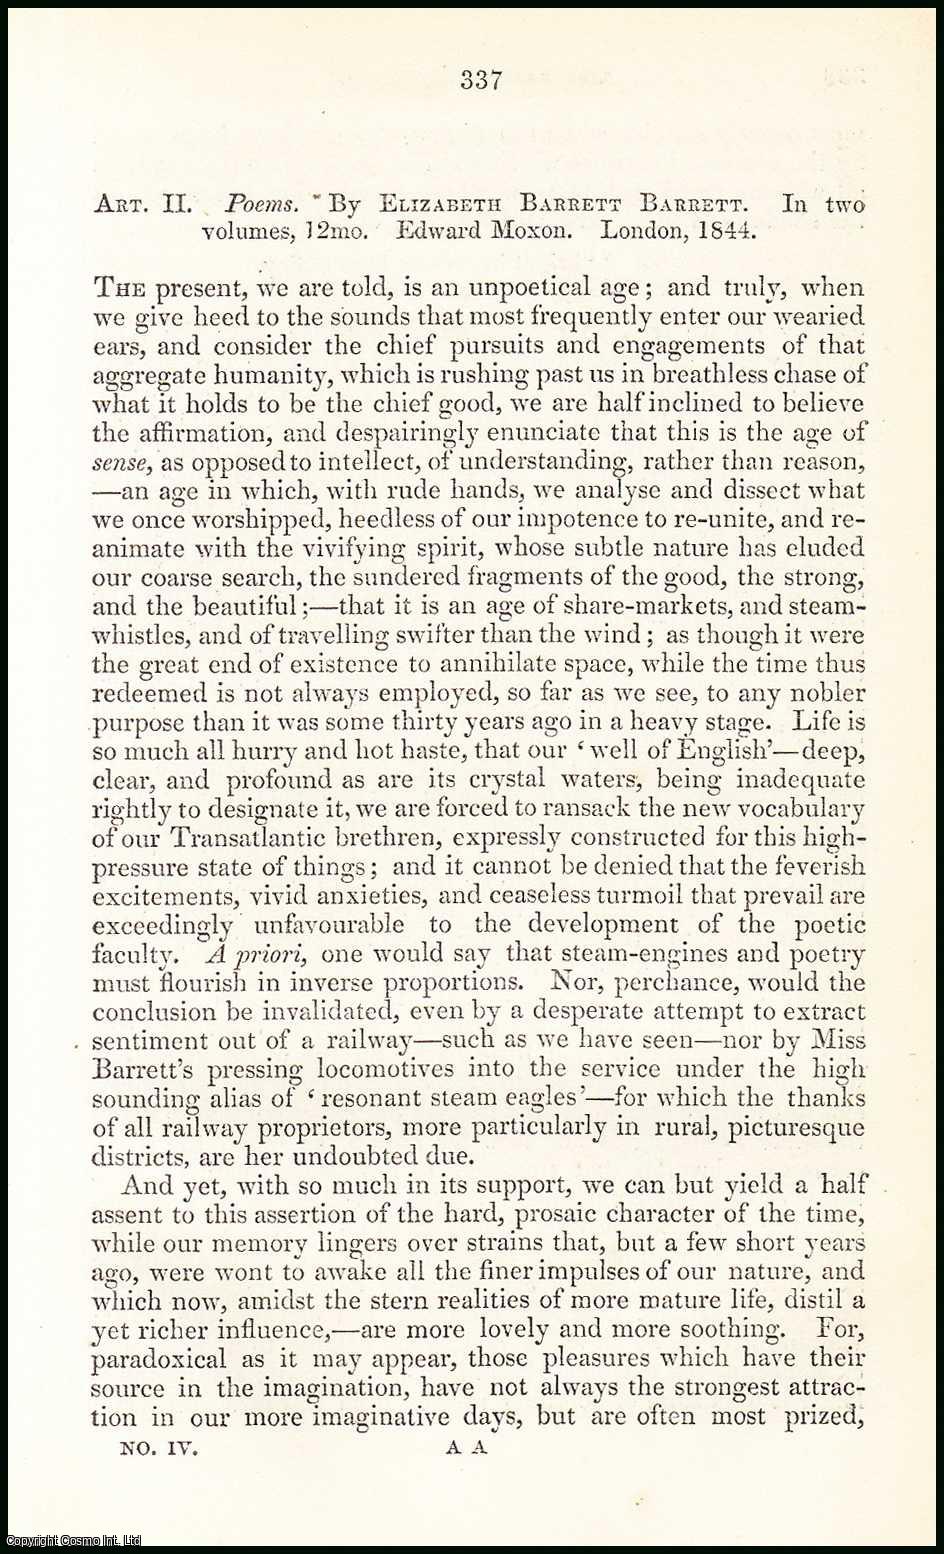 Martha Jones - Miss Elizabeth Barrett's Poems. A rare original article from the British Quarterly Review, 1845.